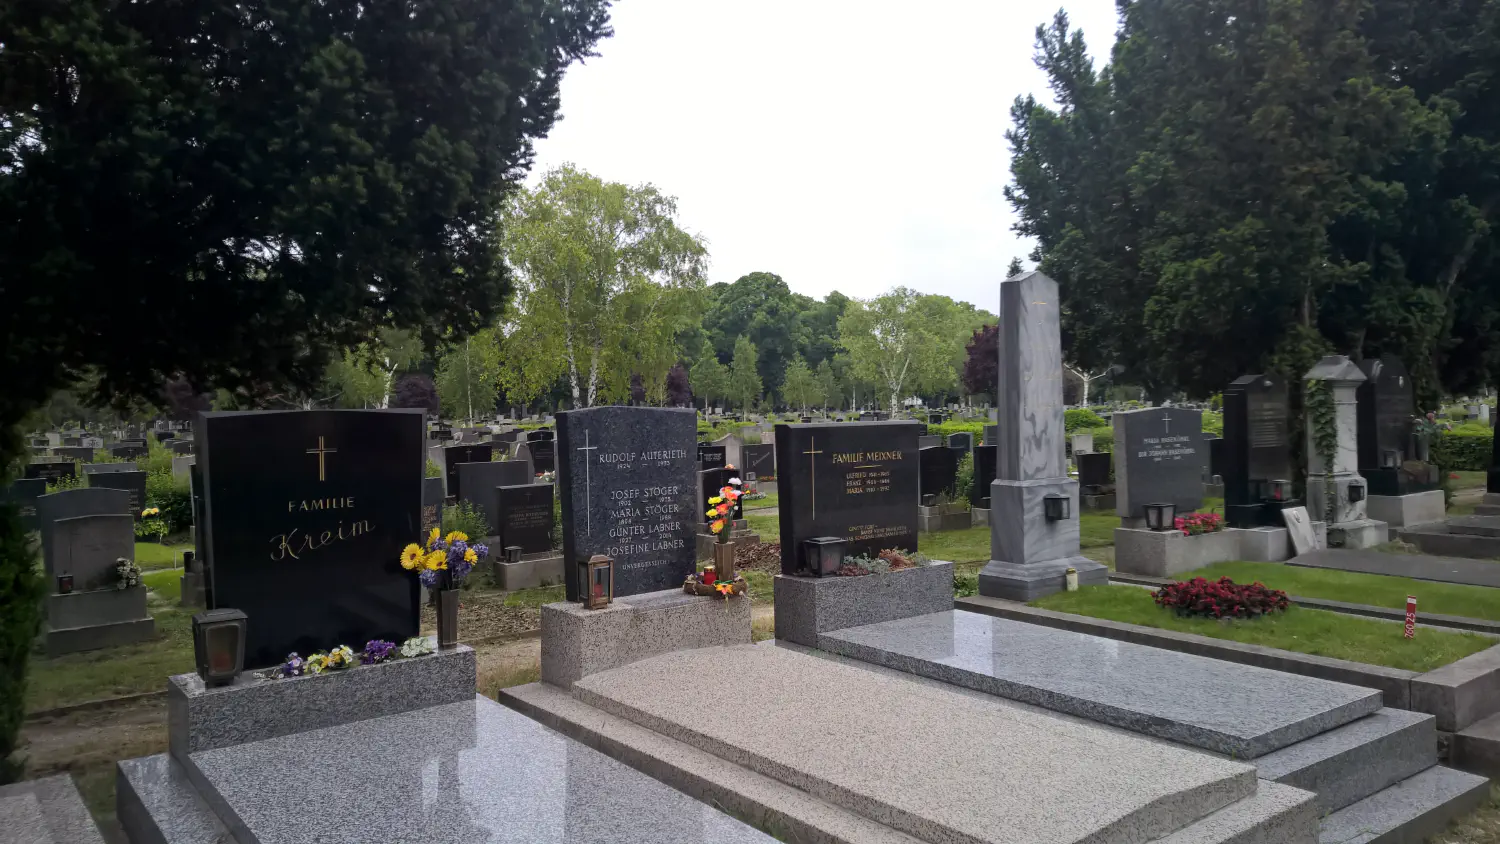 Graves at the Zentralfriedhof